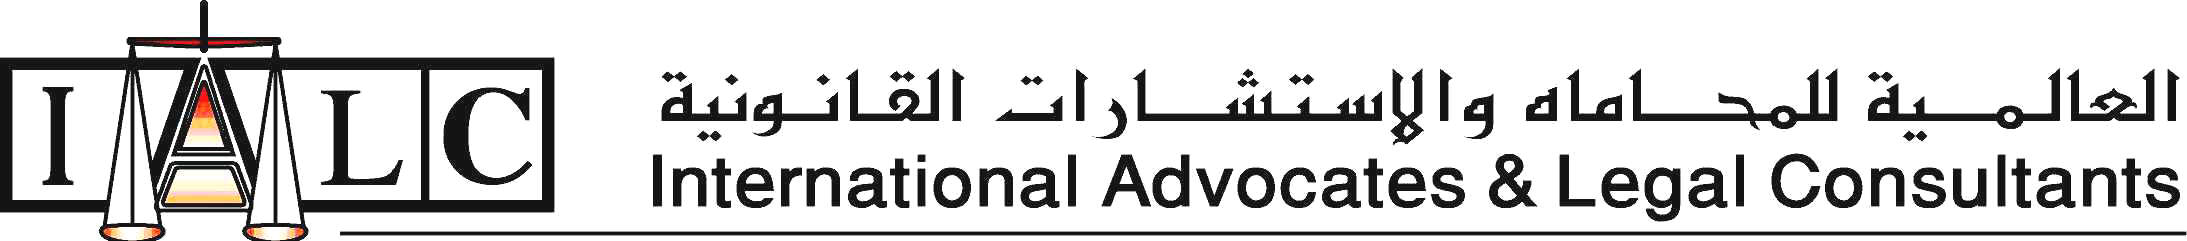 International Advocates & Legal Consultants Logo